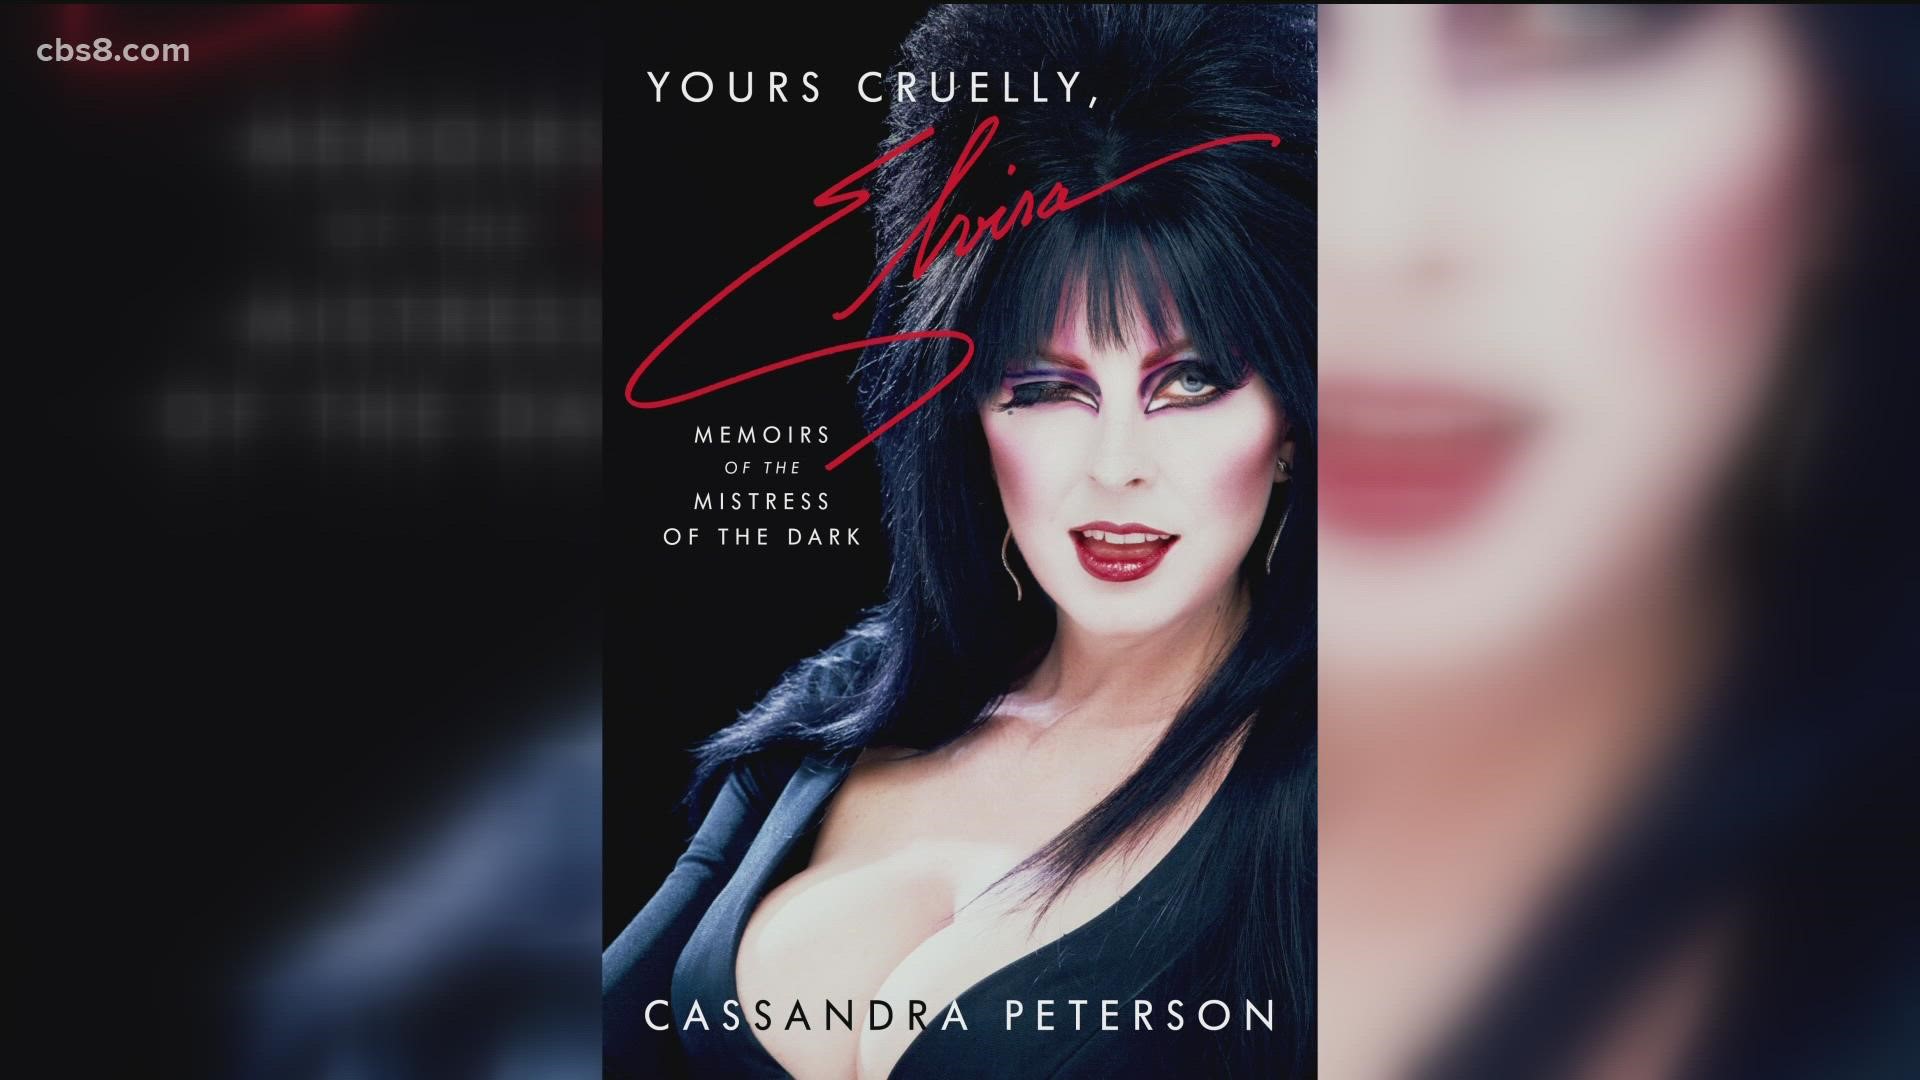 Cassandra Peterson releases new memoir, "Yours Cruelly, Elvira" out now.